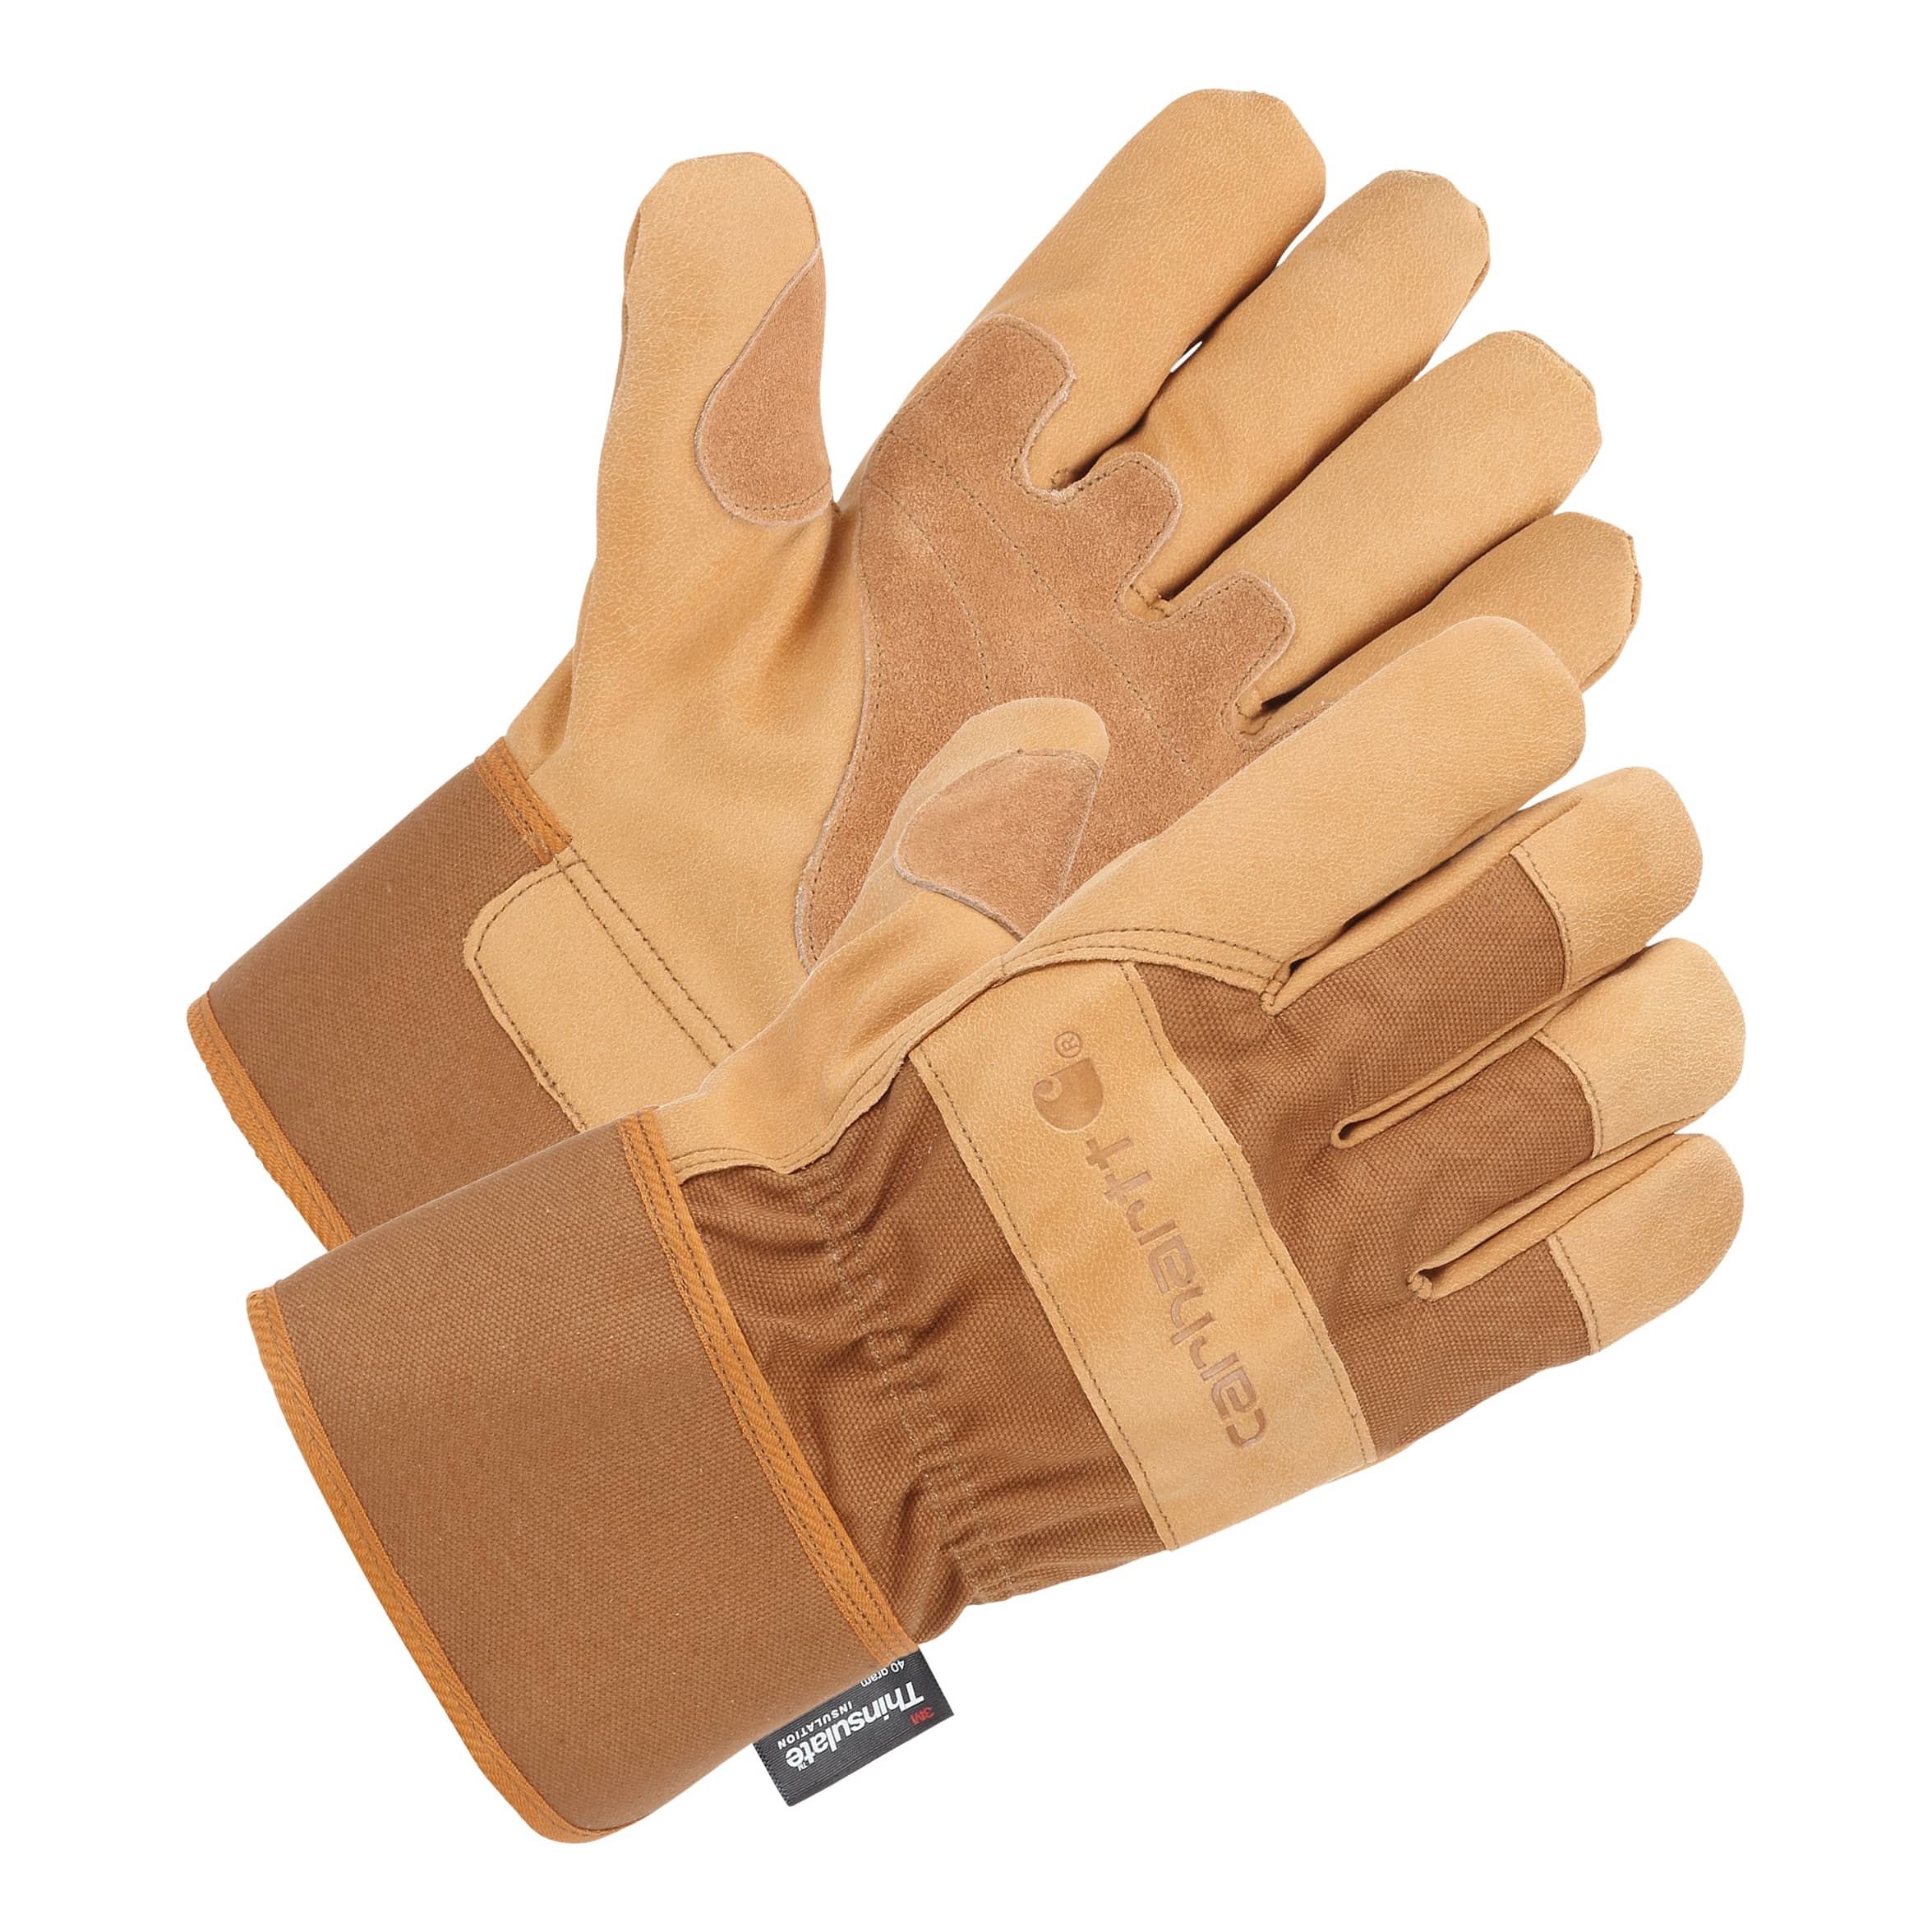 Carhartt® Men’s Insulated Grain Leather Safety-Cuff Work Gloves